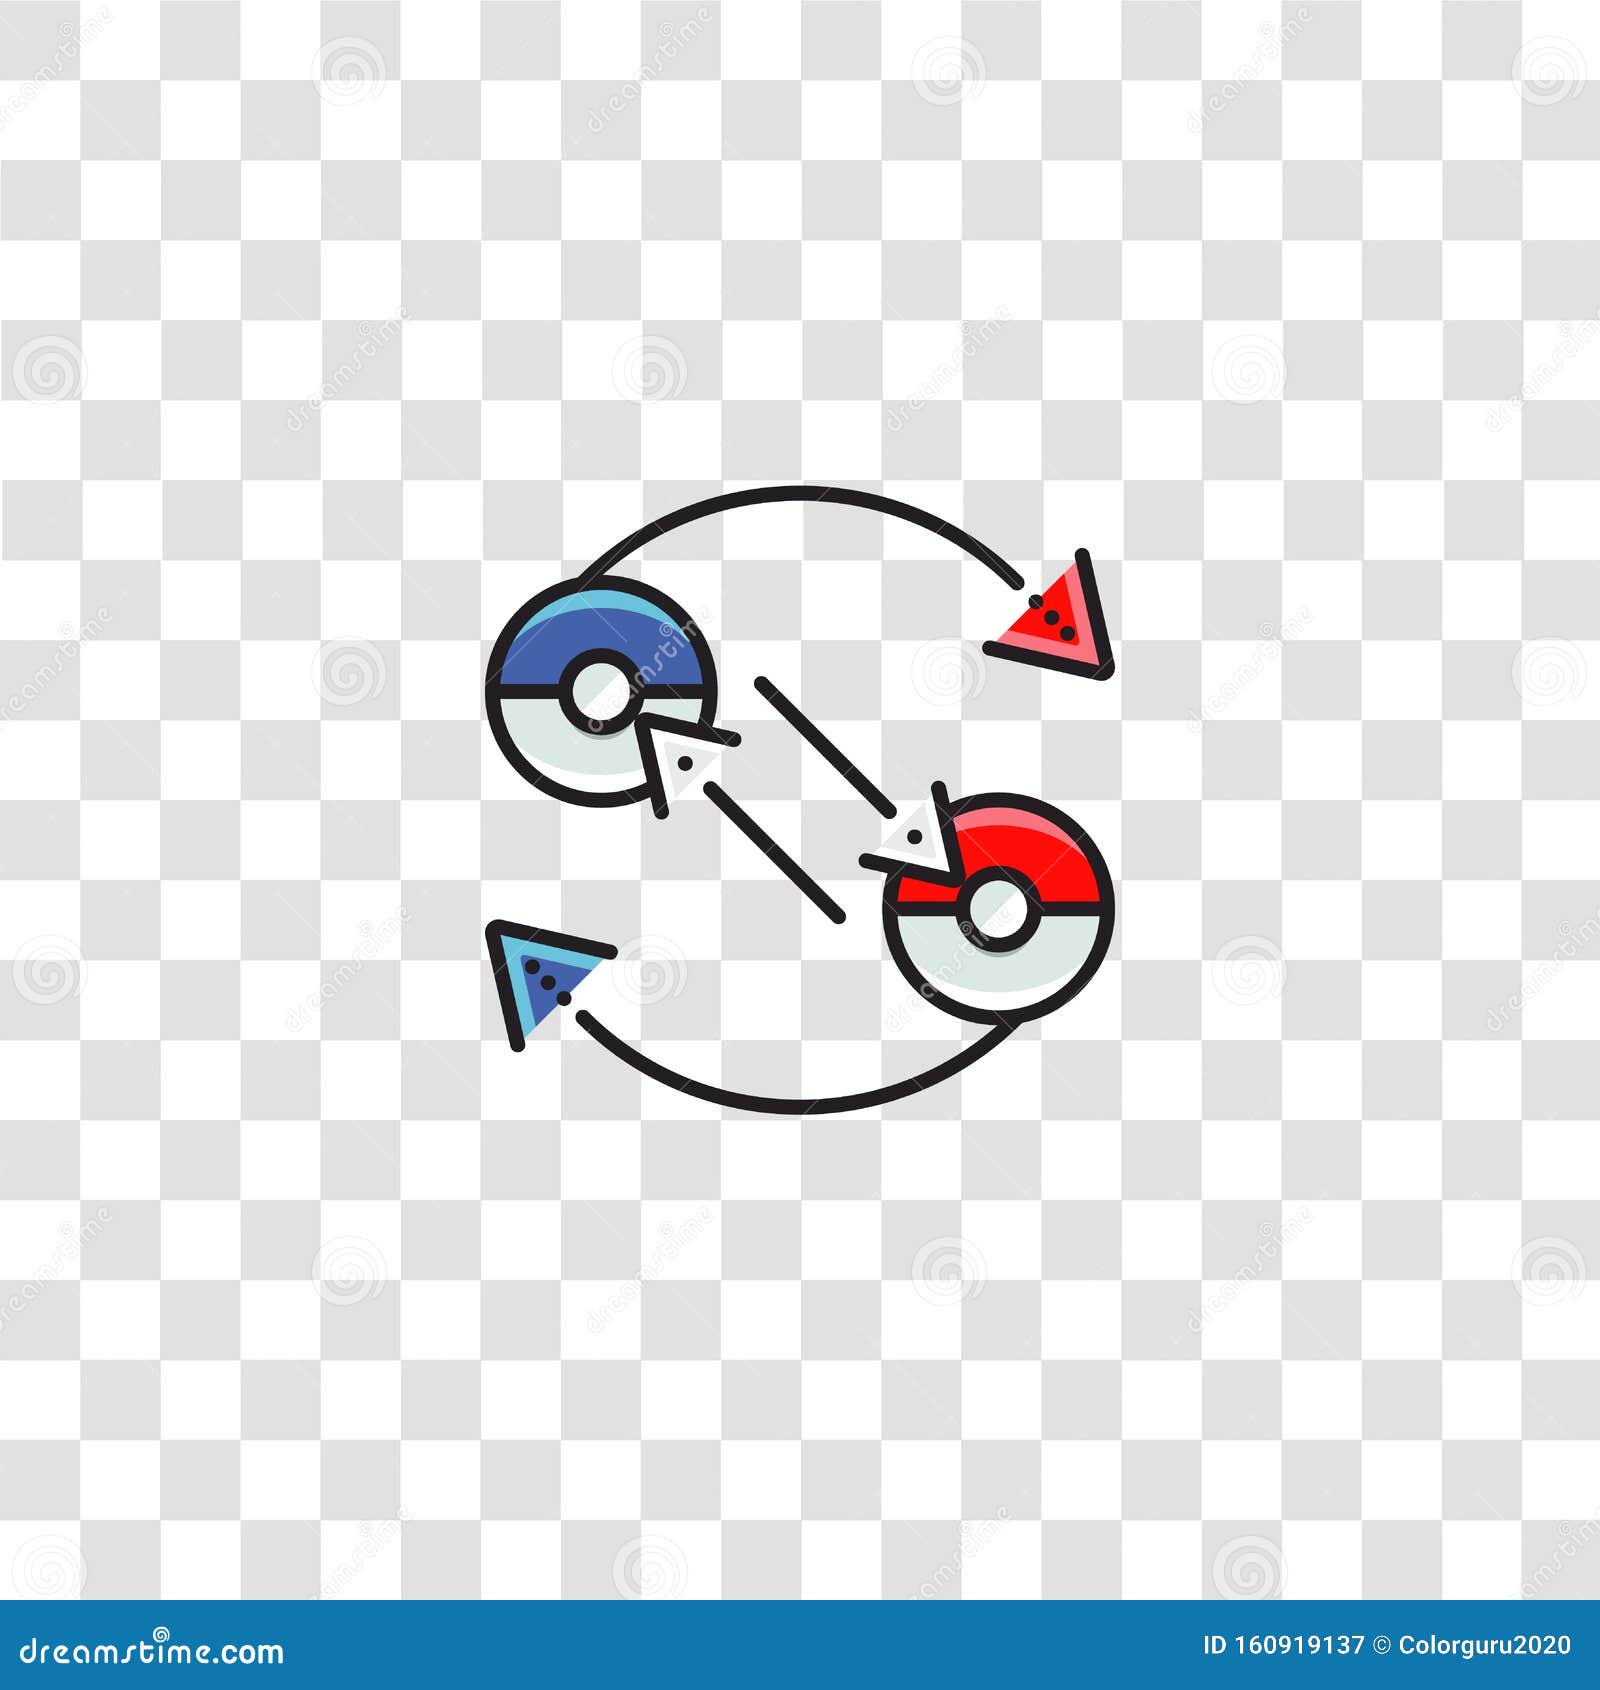 Pokeballs Icon Sign and Symbol. Pokeballs Color Icon for Website